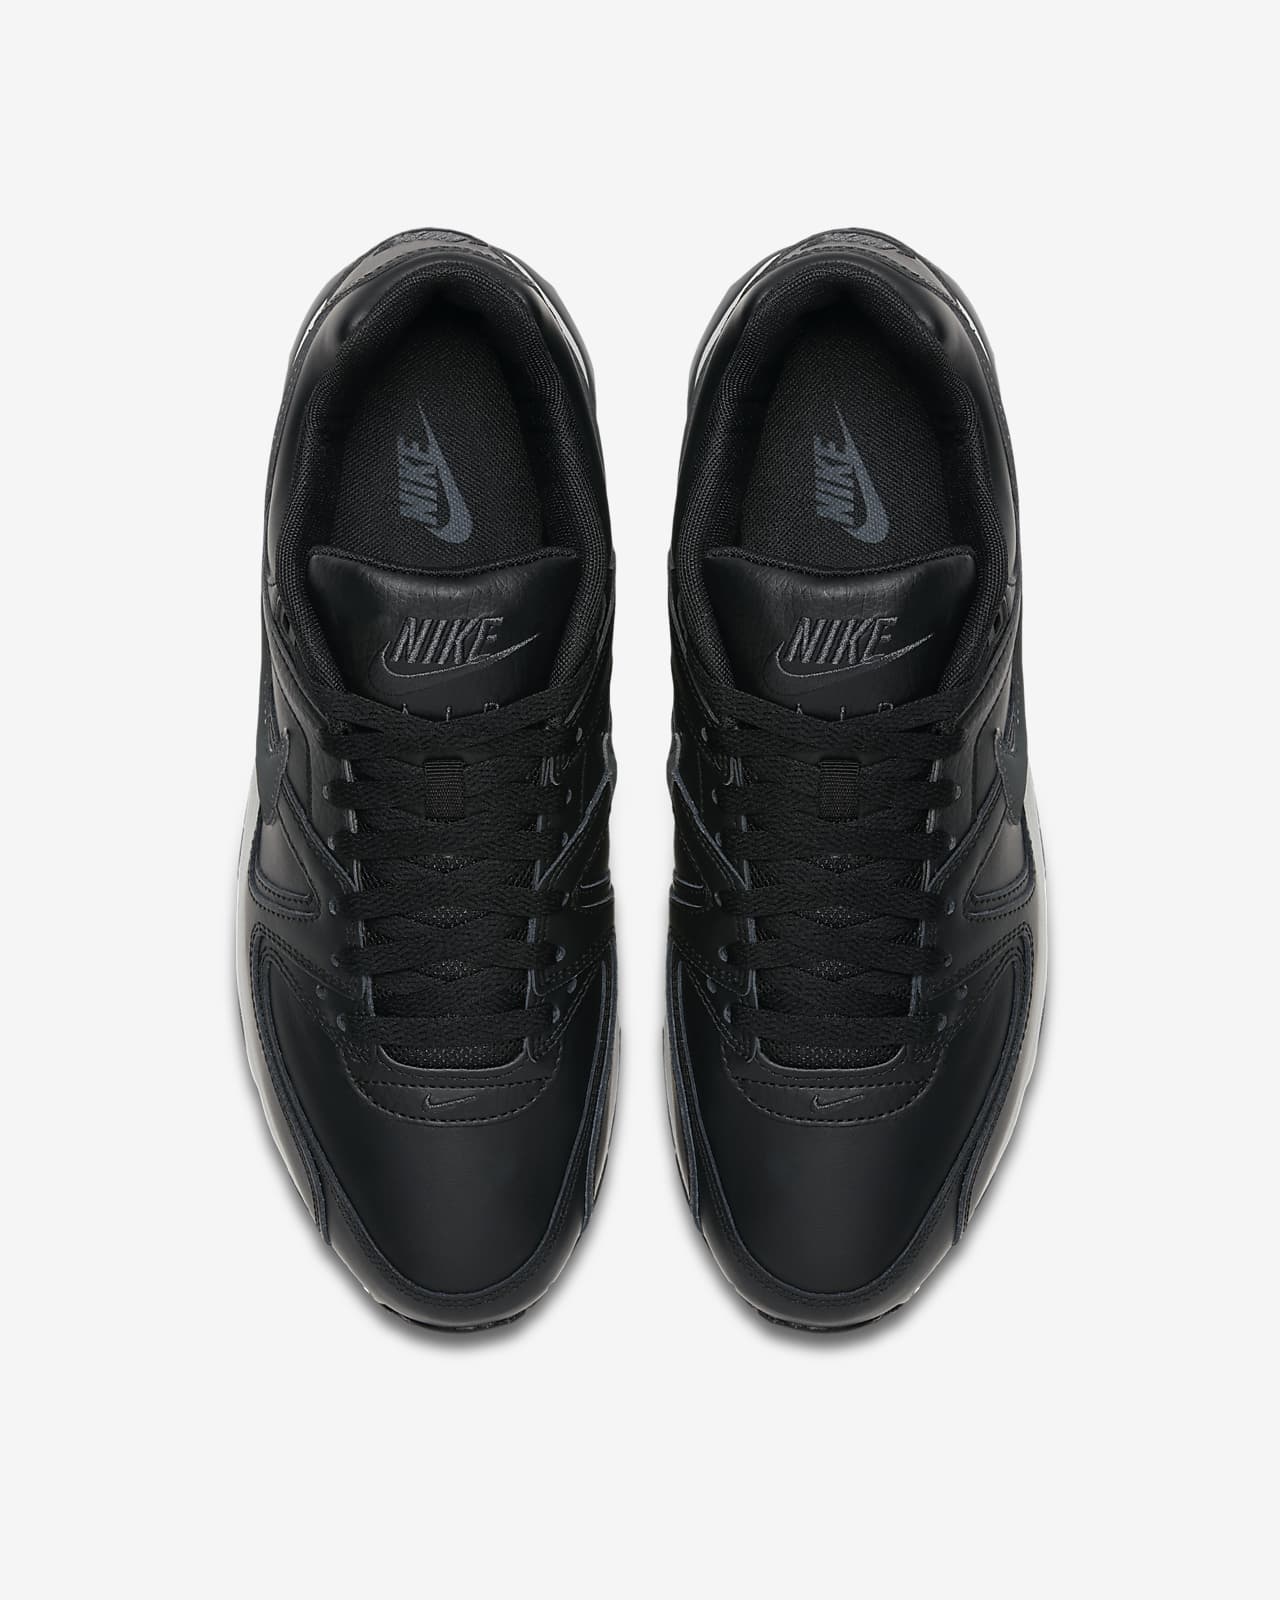 nike black leather shoes australia